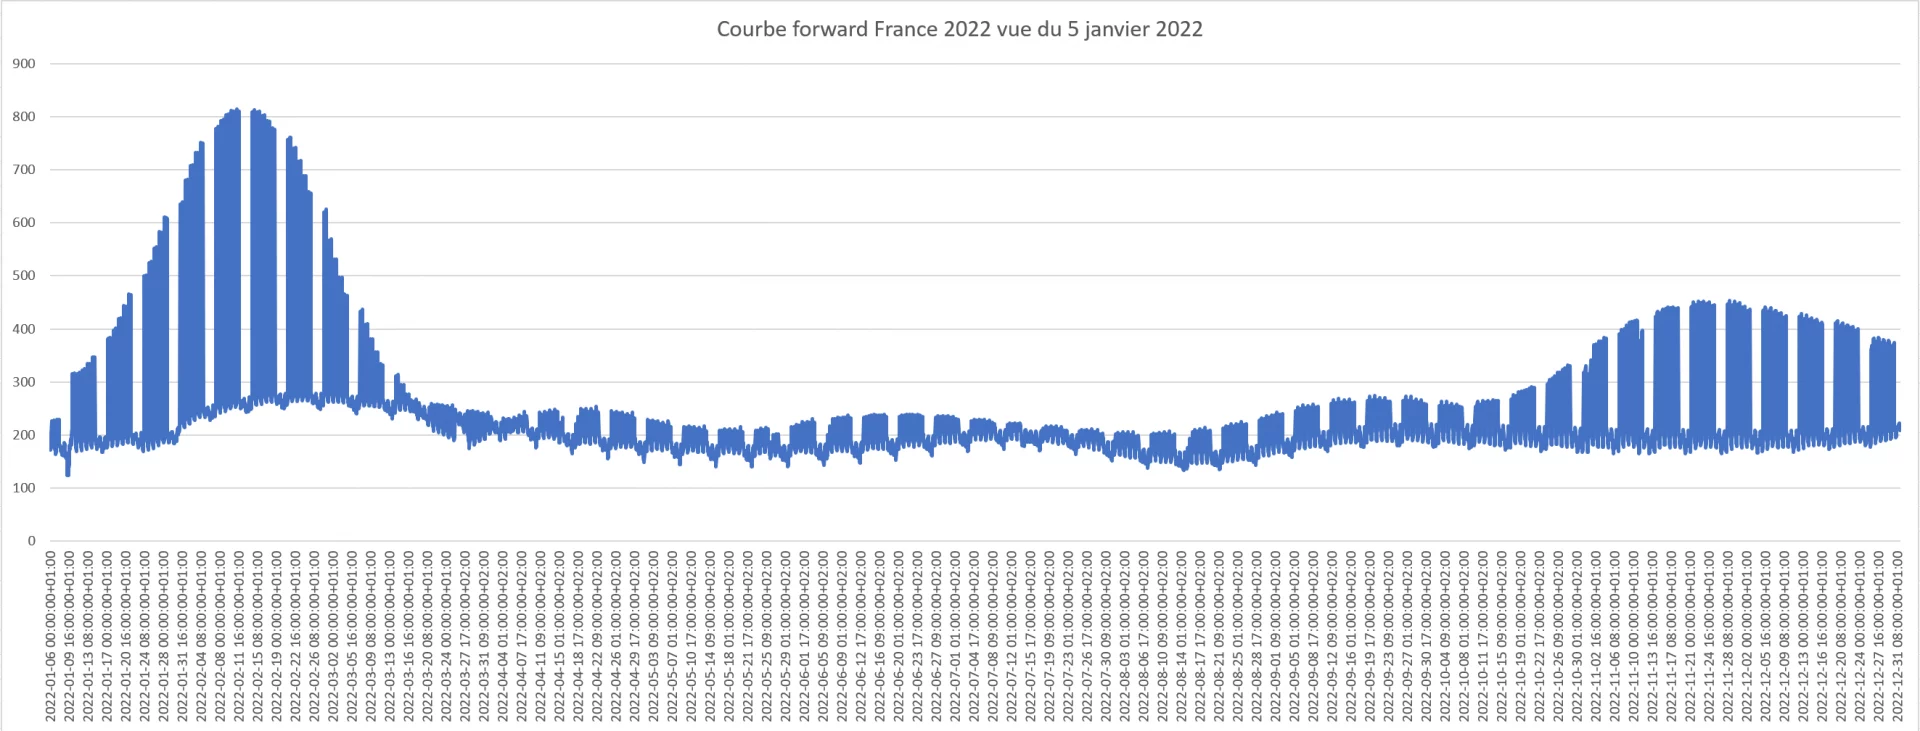 Blog - Forward France curve of 5 January 2022